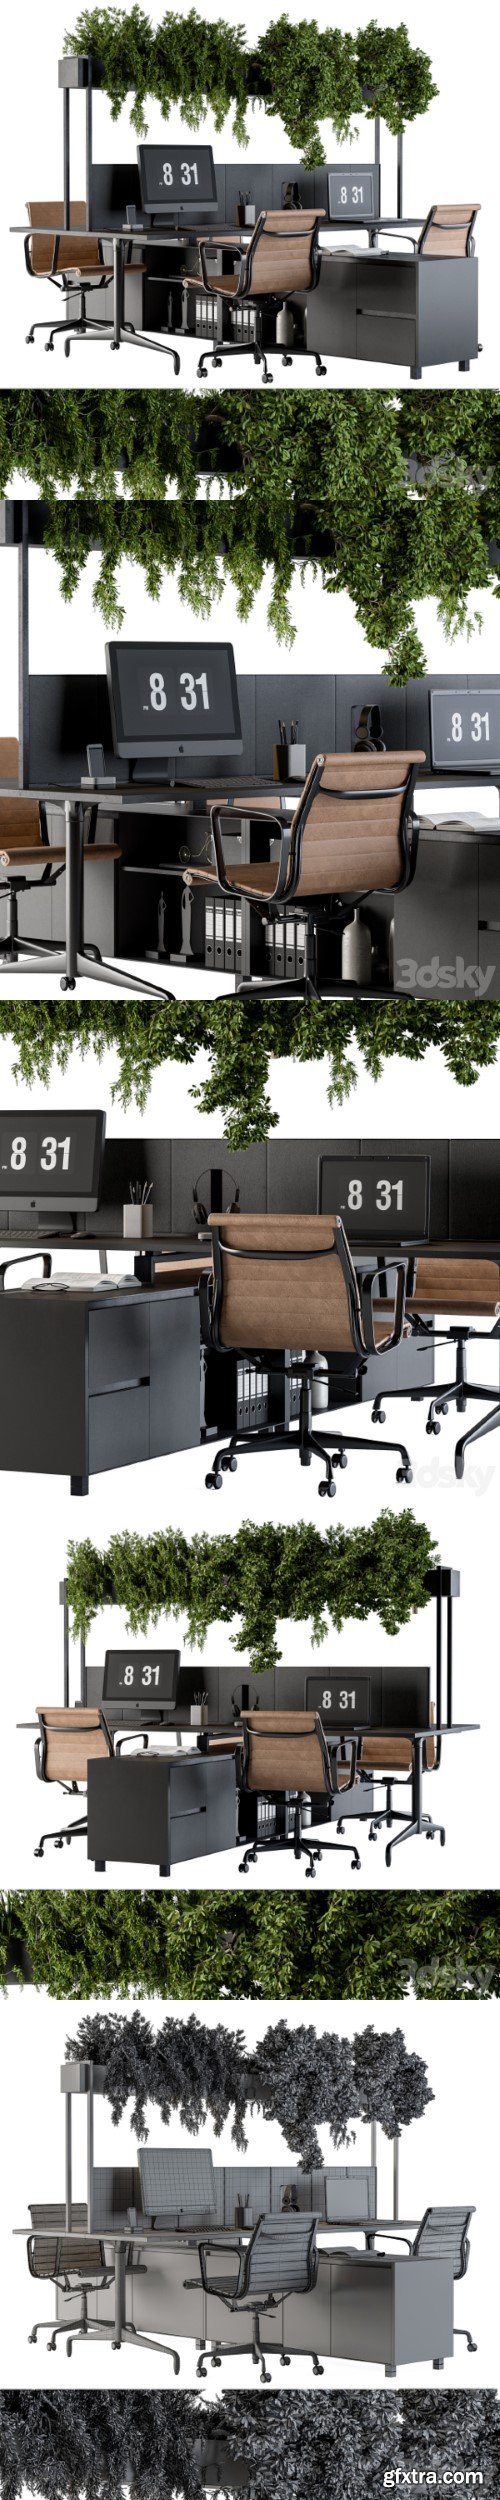 Office Furniture - employee Set 16 | Vray+Corona